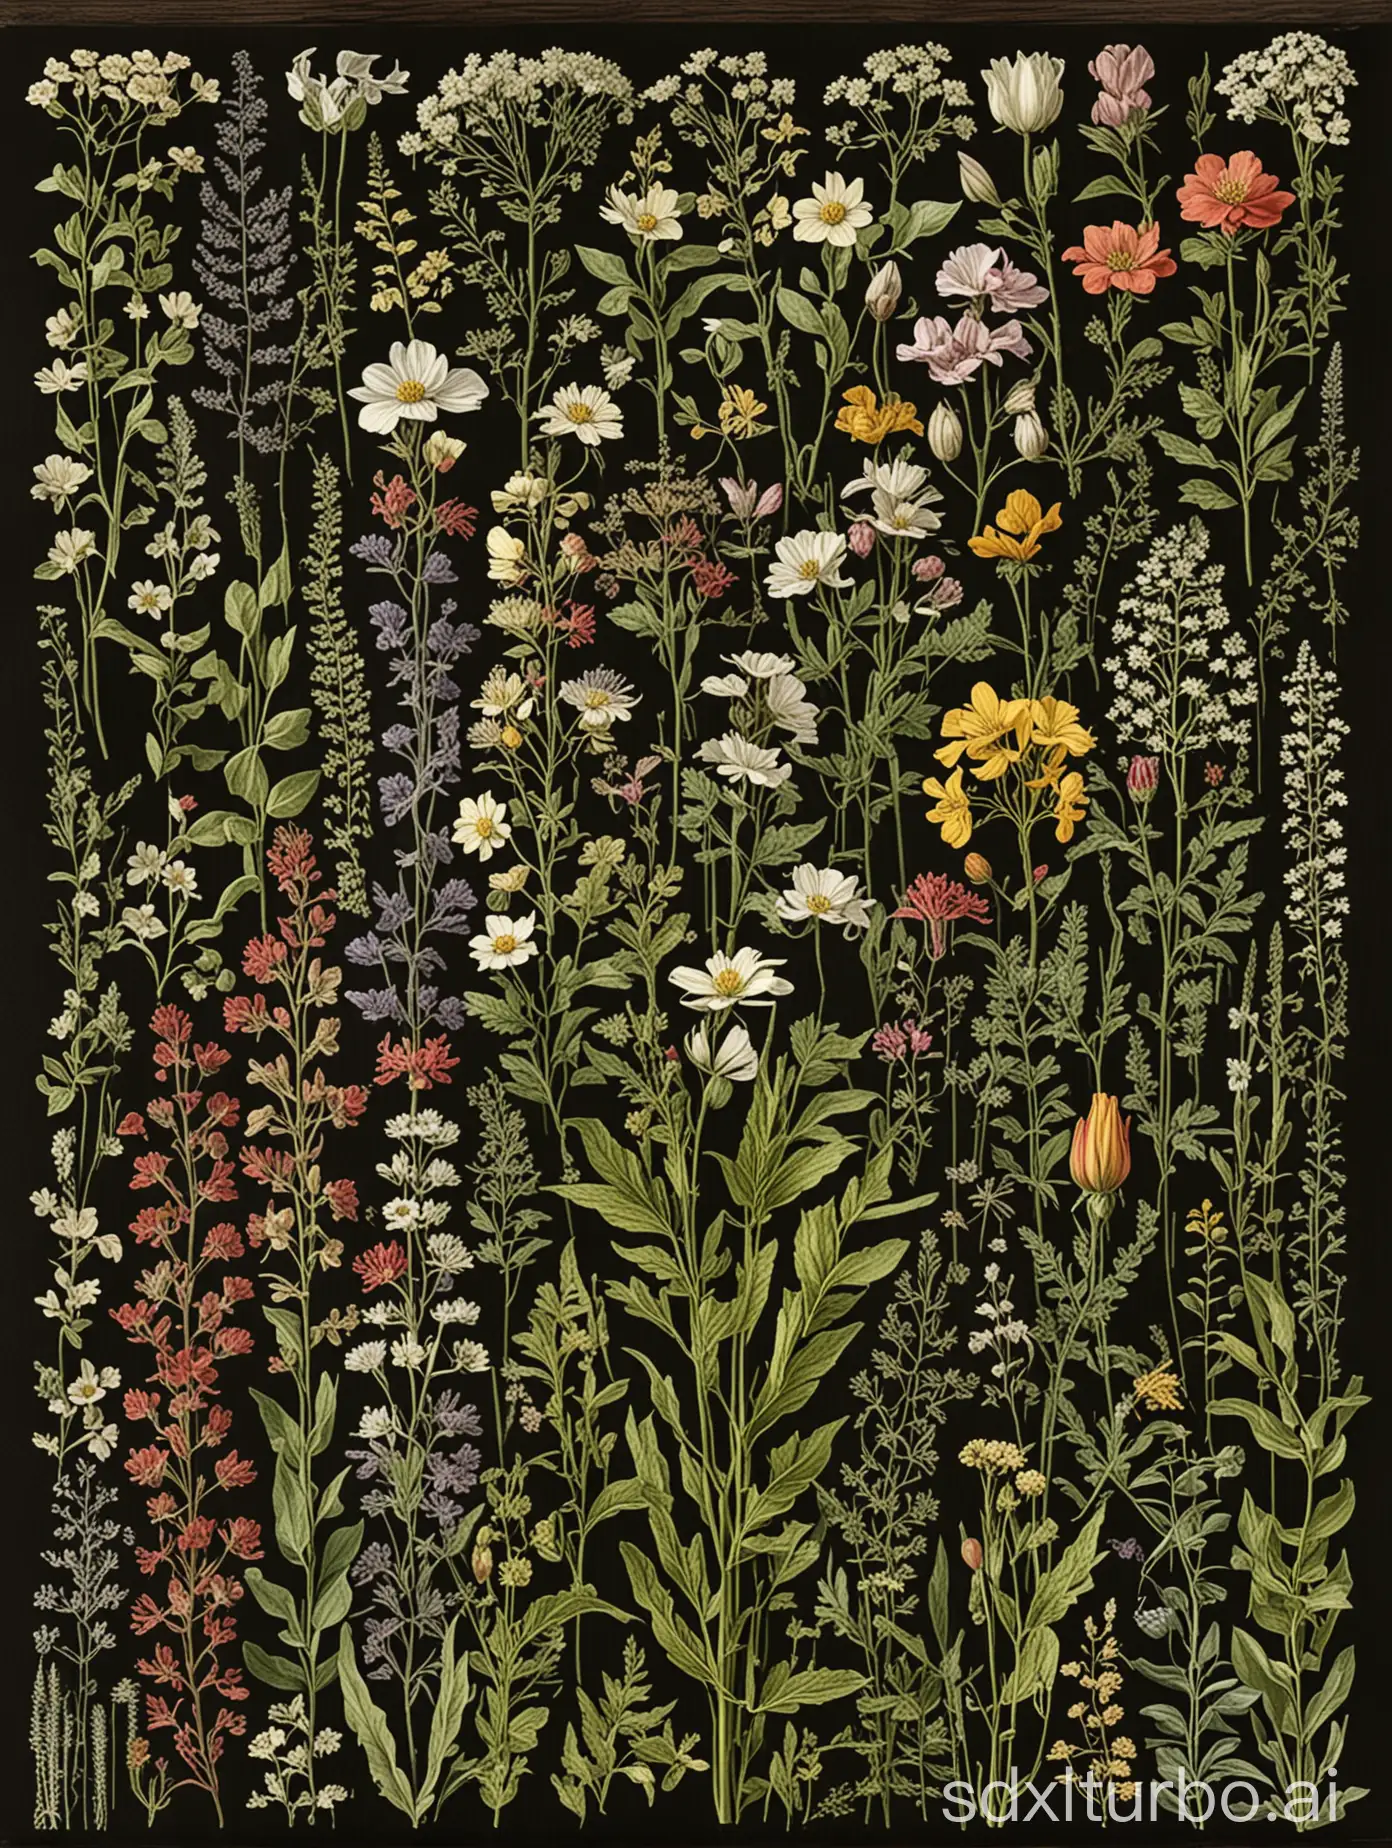 HyperDetailed-Botanical-Herbarium-Poster-of-Wildflowers